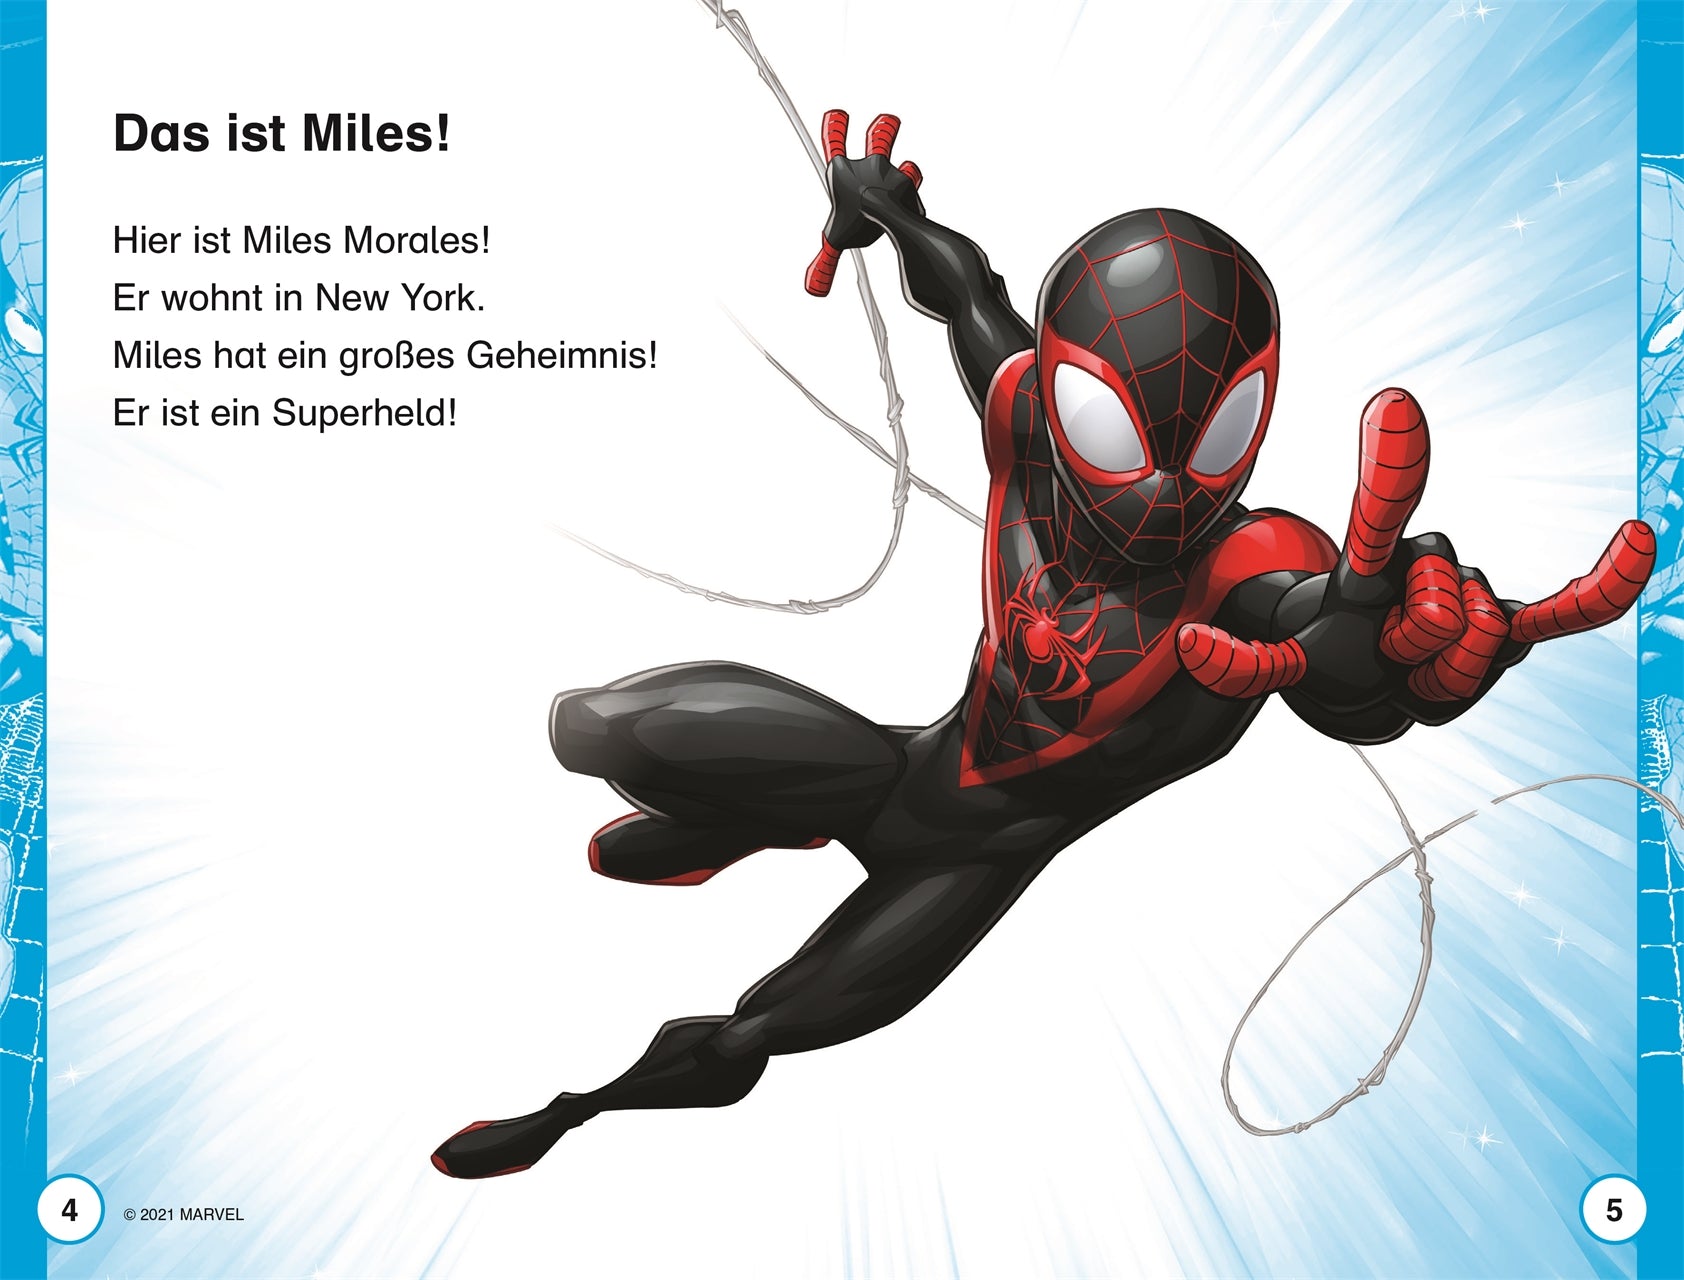 Miles Morales ist Spider-Man (Marvel Spiderman)